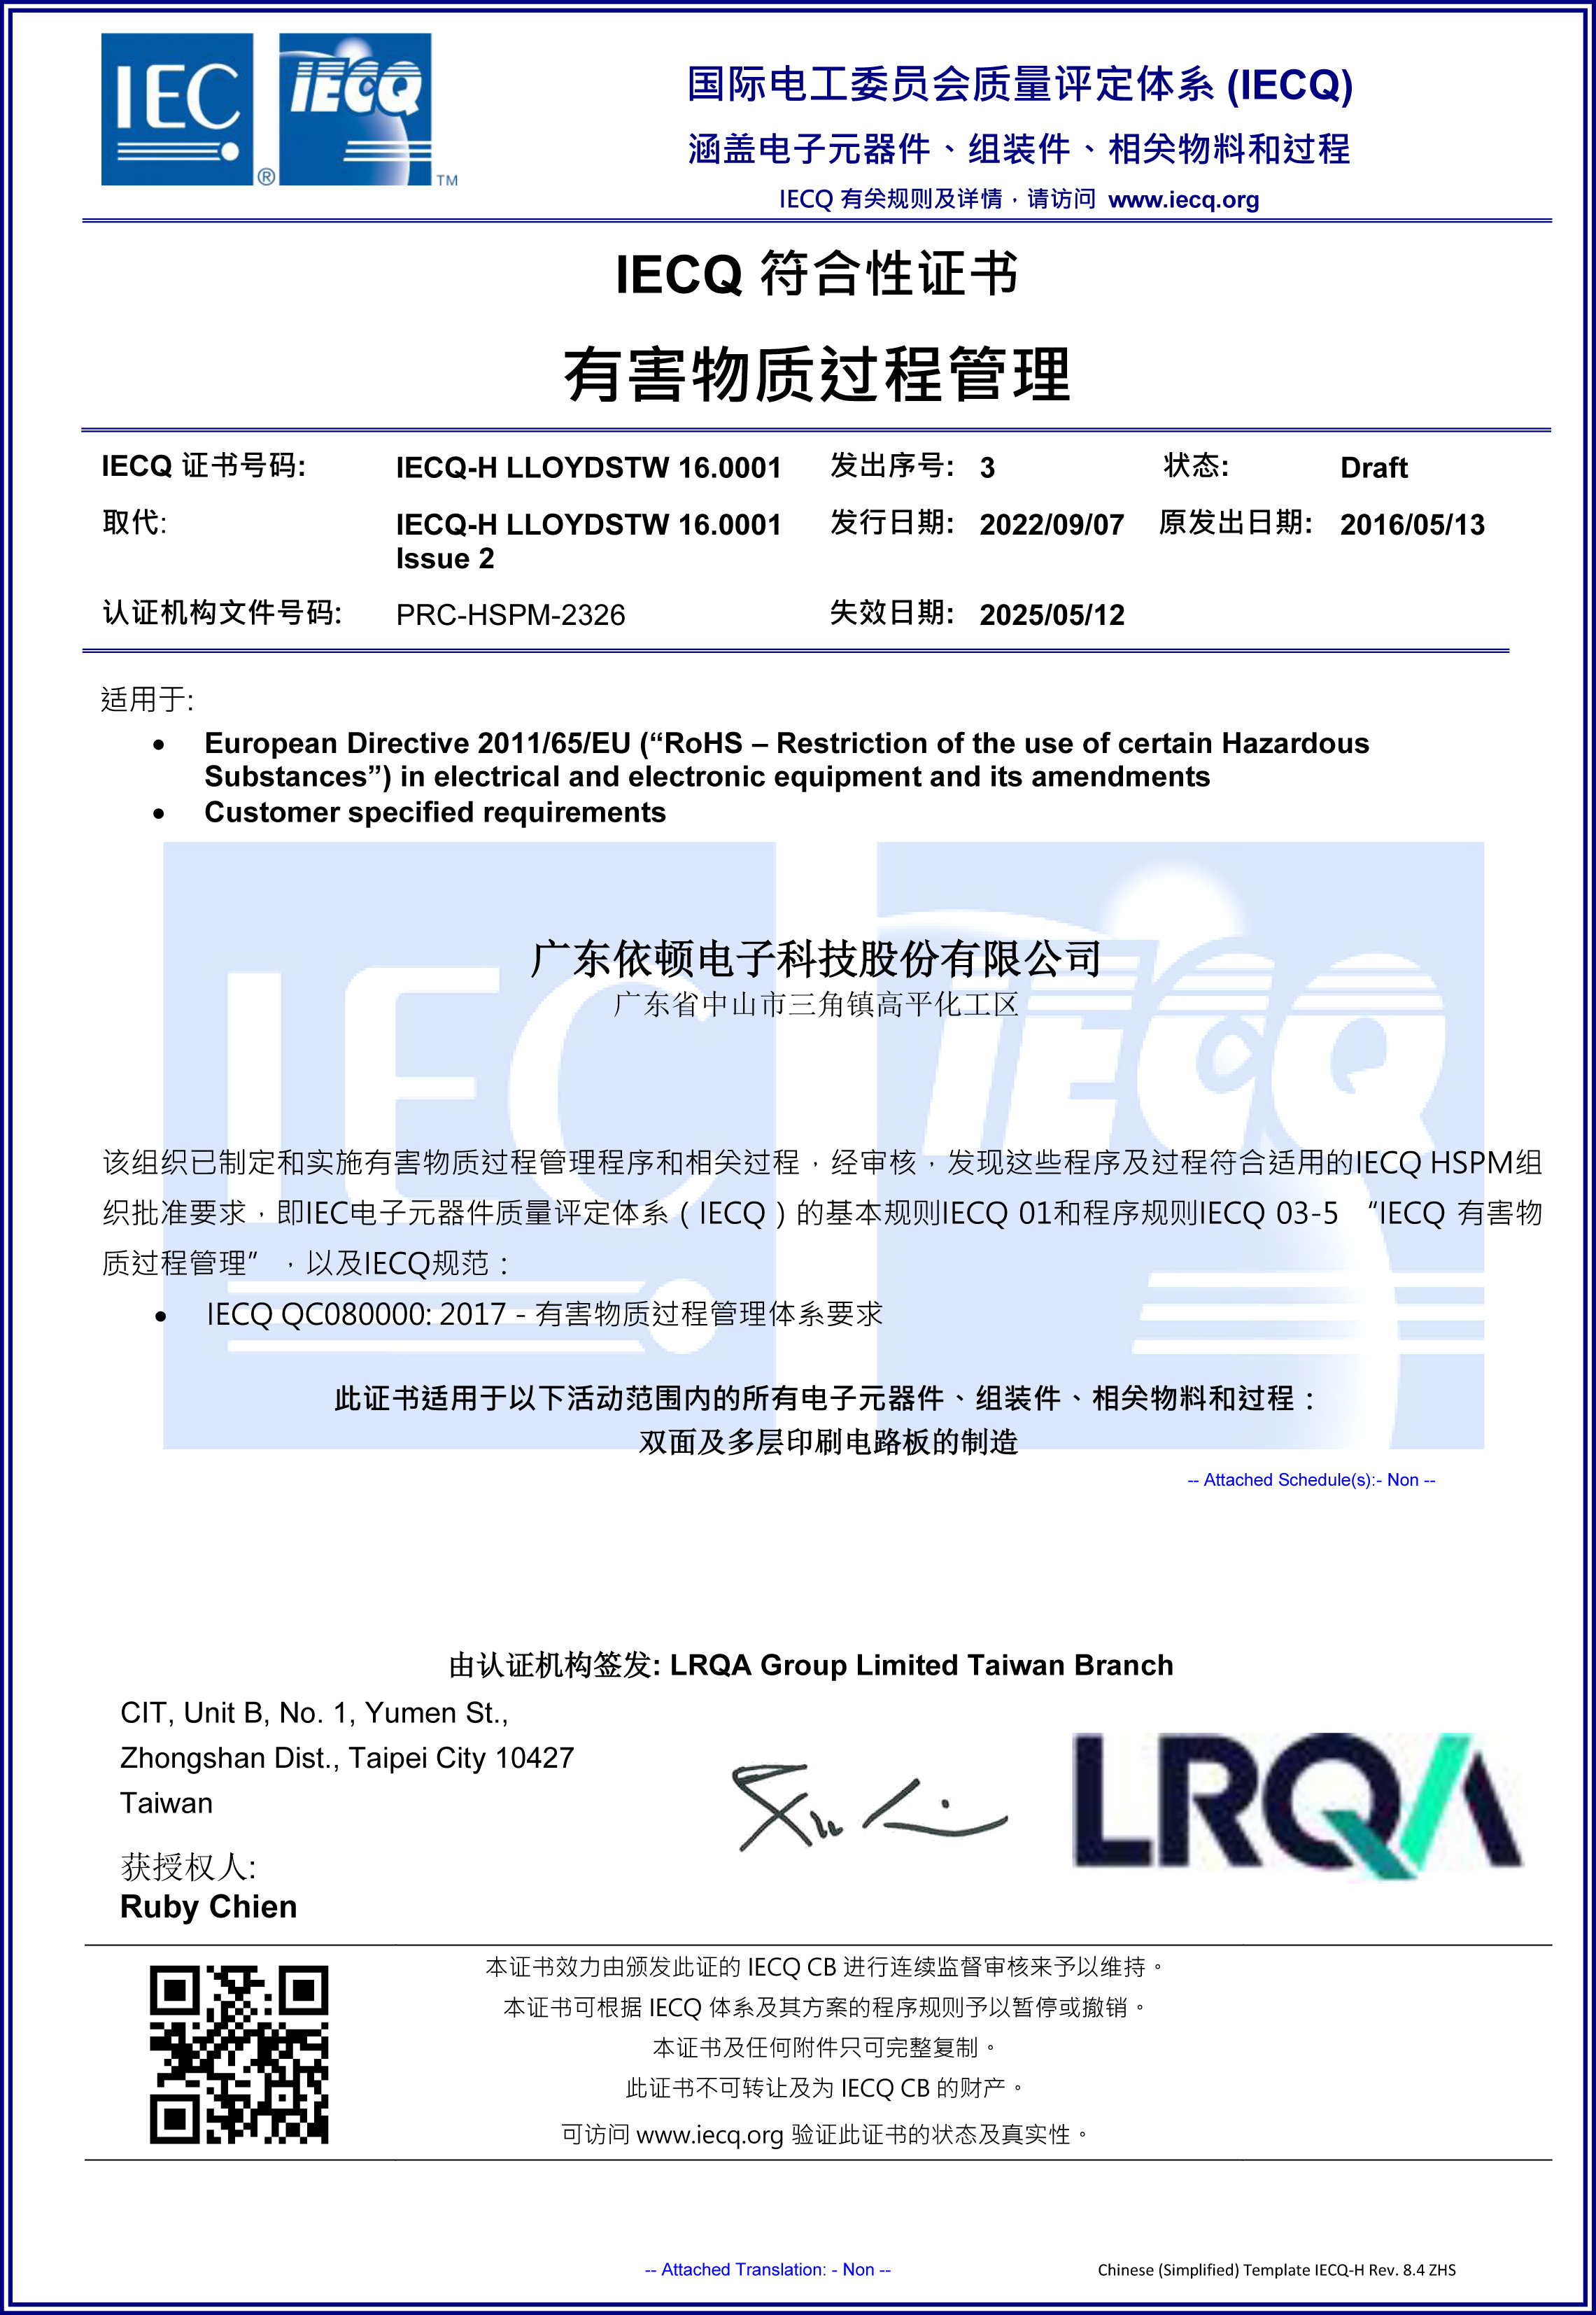 QC080000有害物质管理体系认证证书